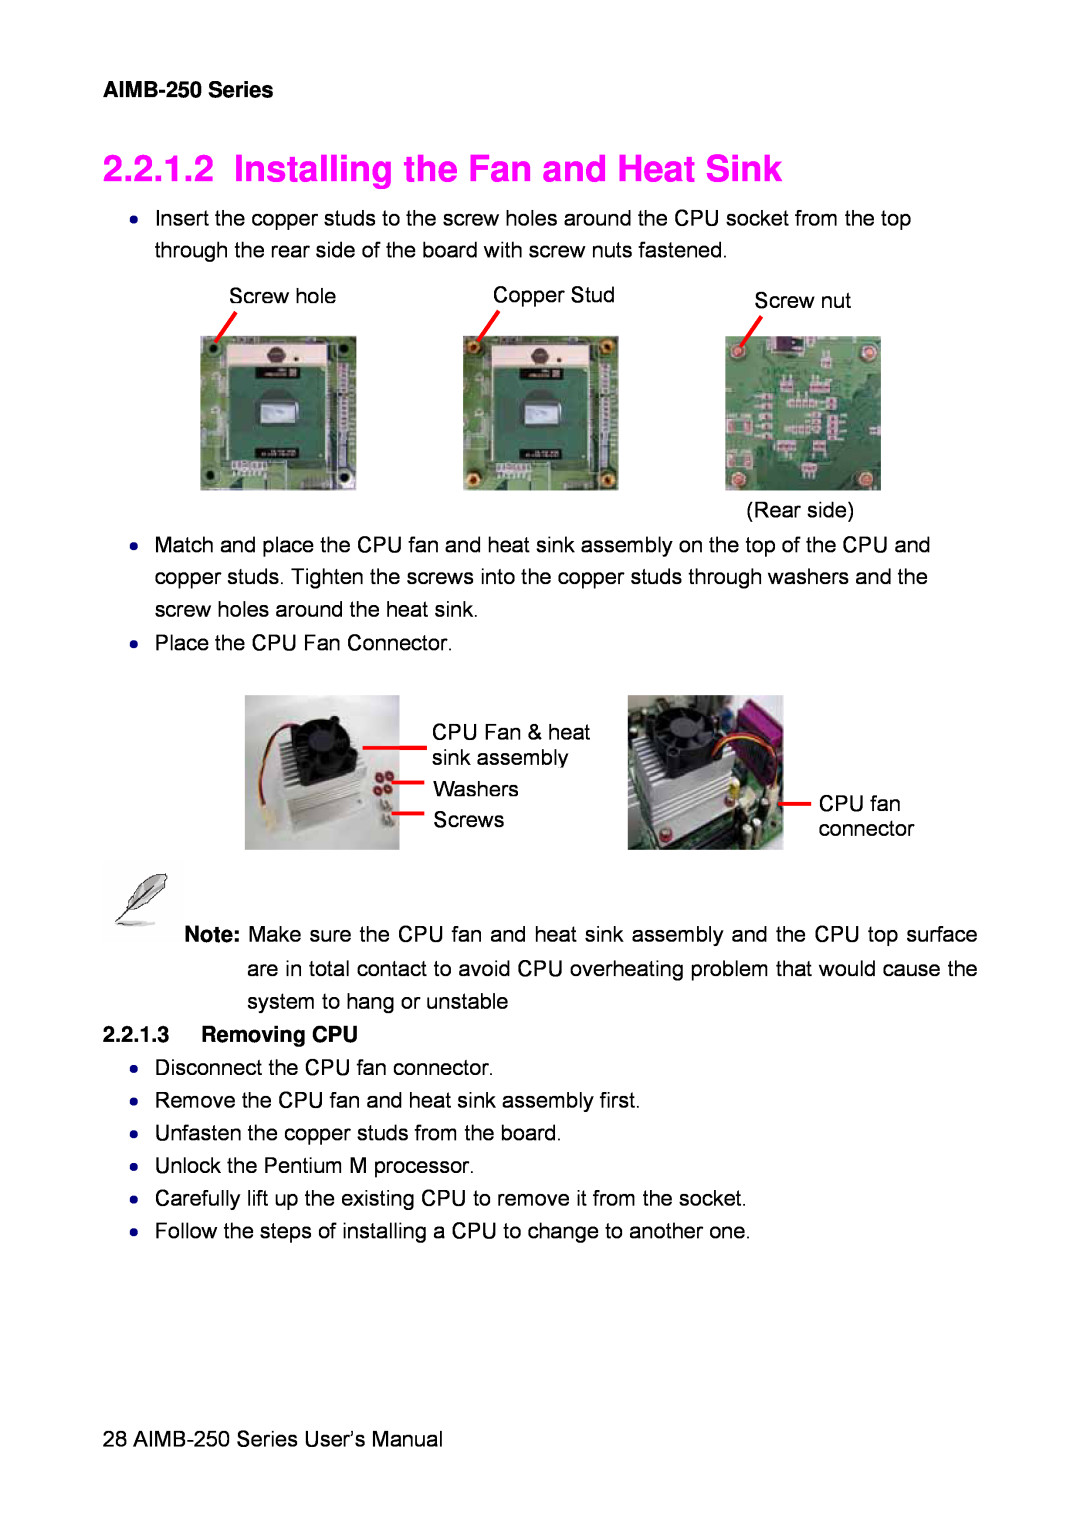 Advantech user manual Installing the Fan and Heat Sink, Removing CPU, AIMB-250 Series 